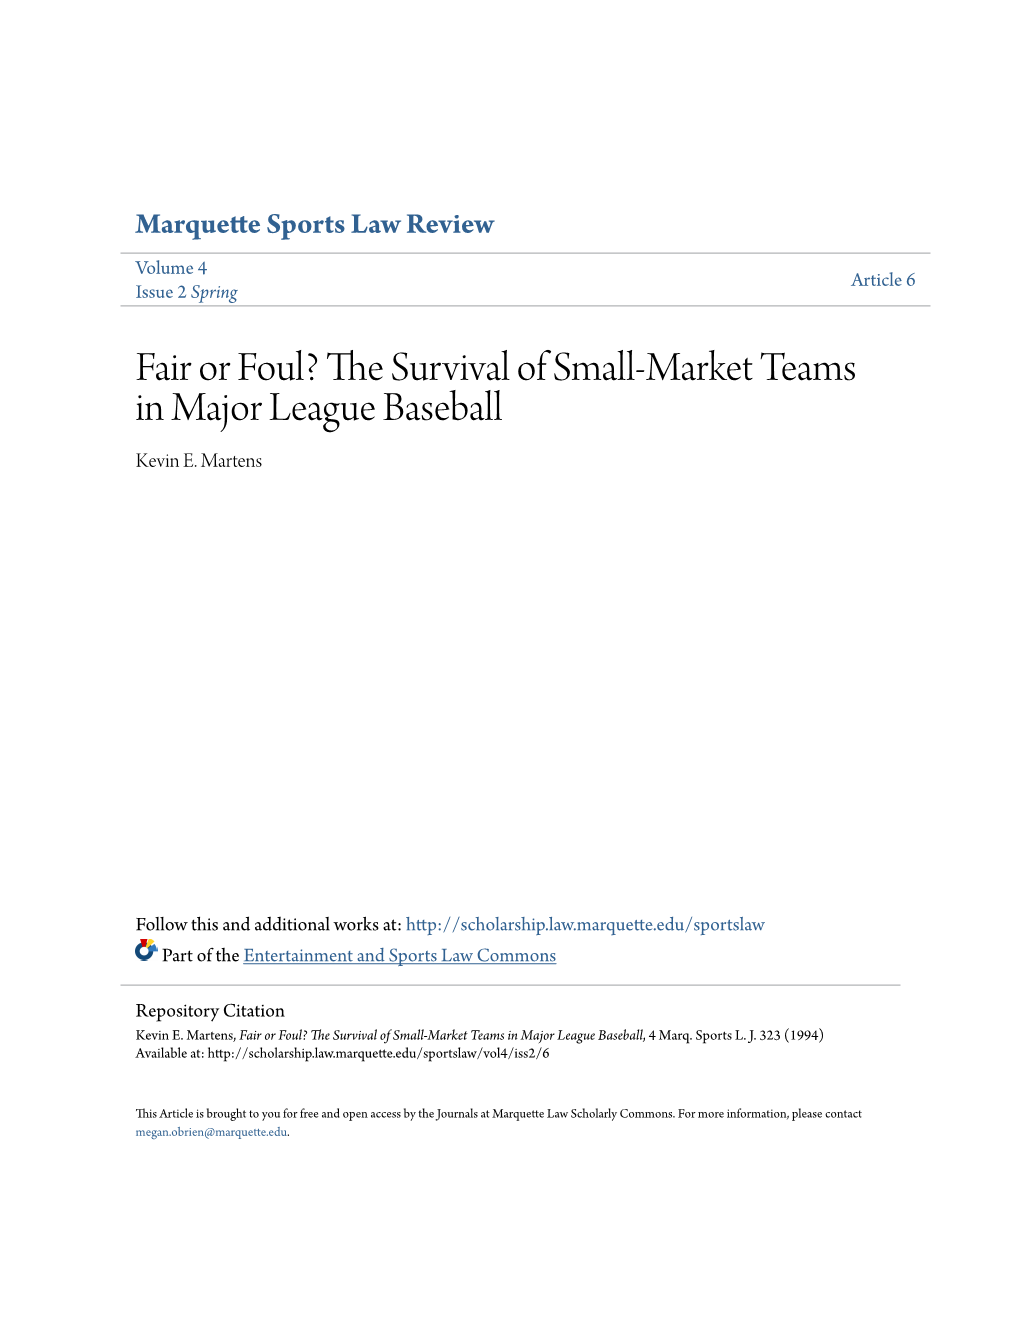 The Survival of Small-Market Teams in Major League Baseball, 4 Marq